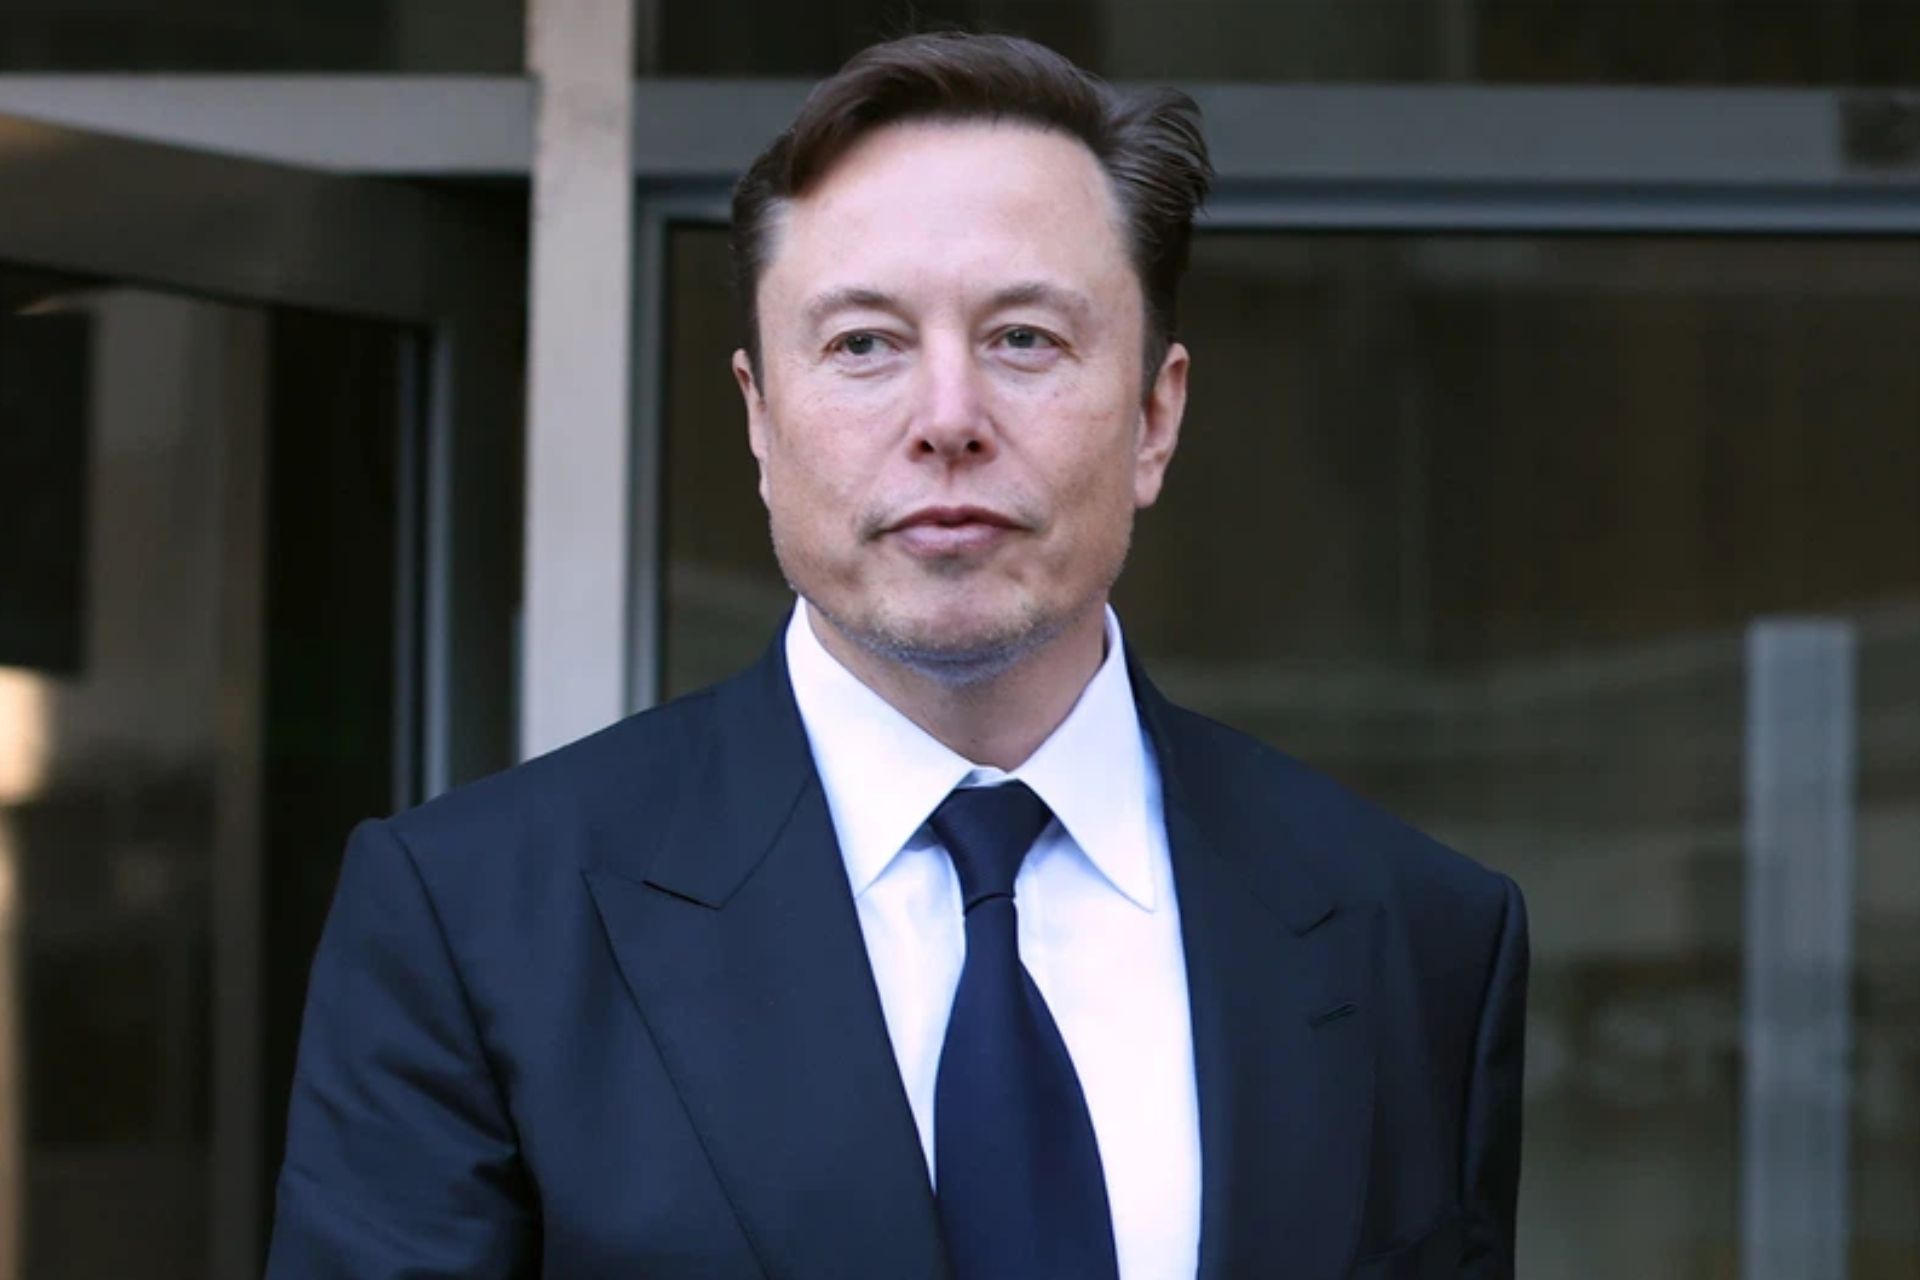 Elon Musk biography